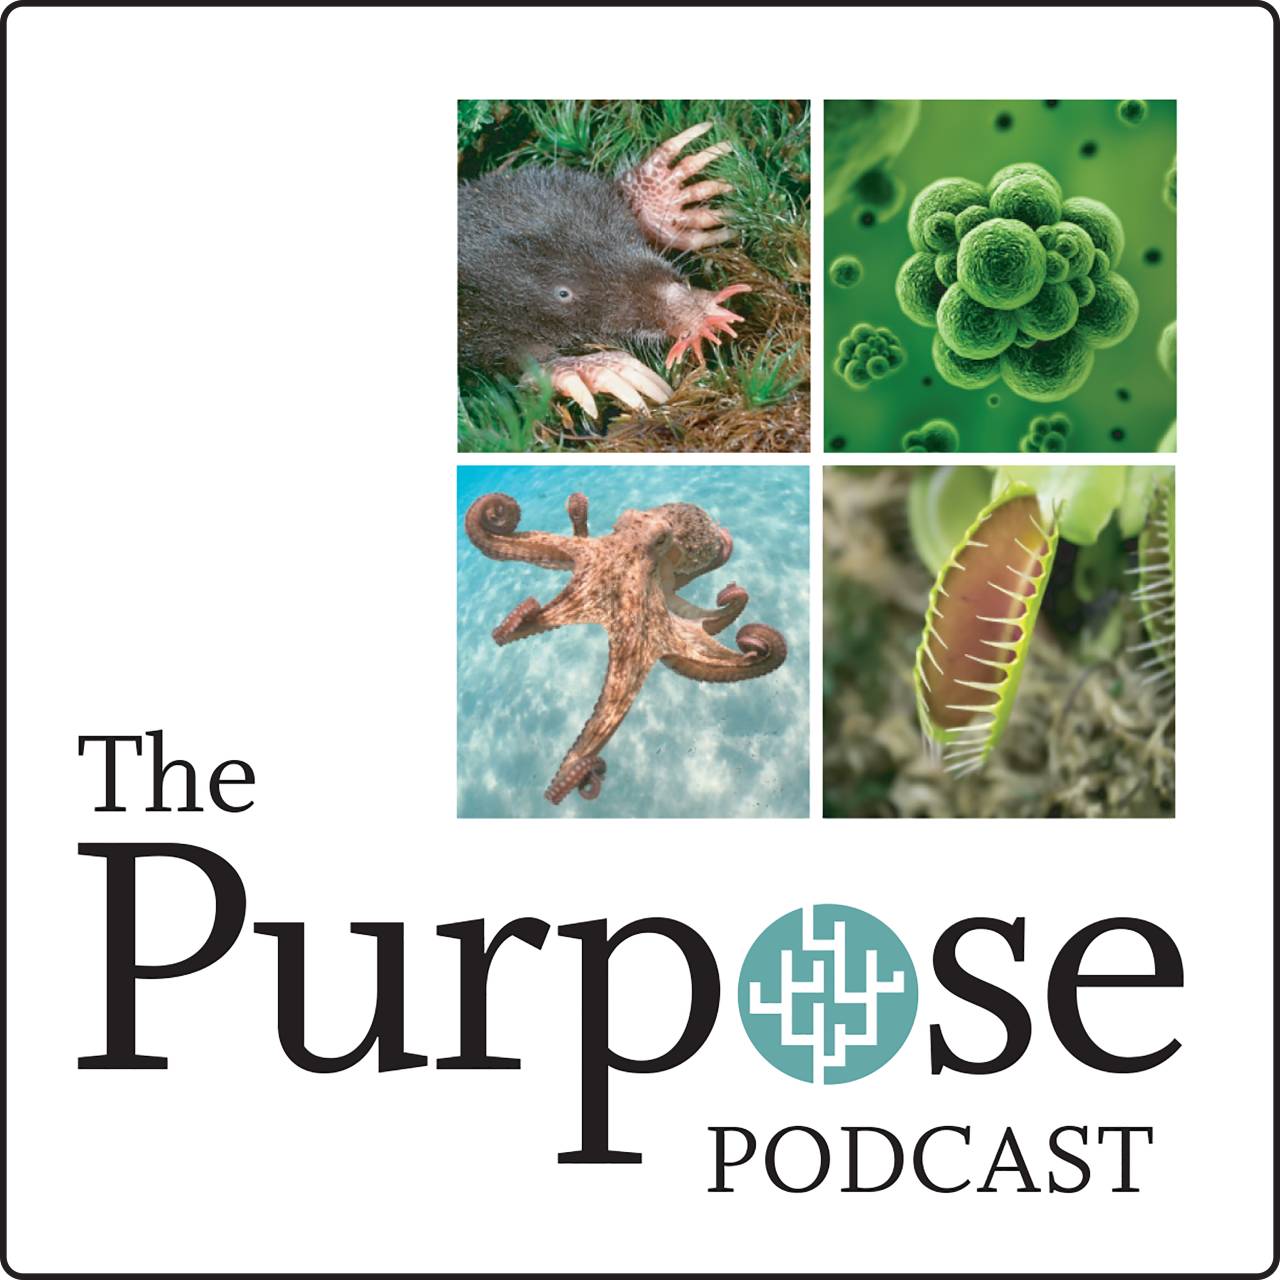 purpose podcast logo